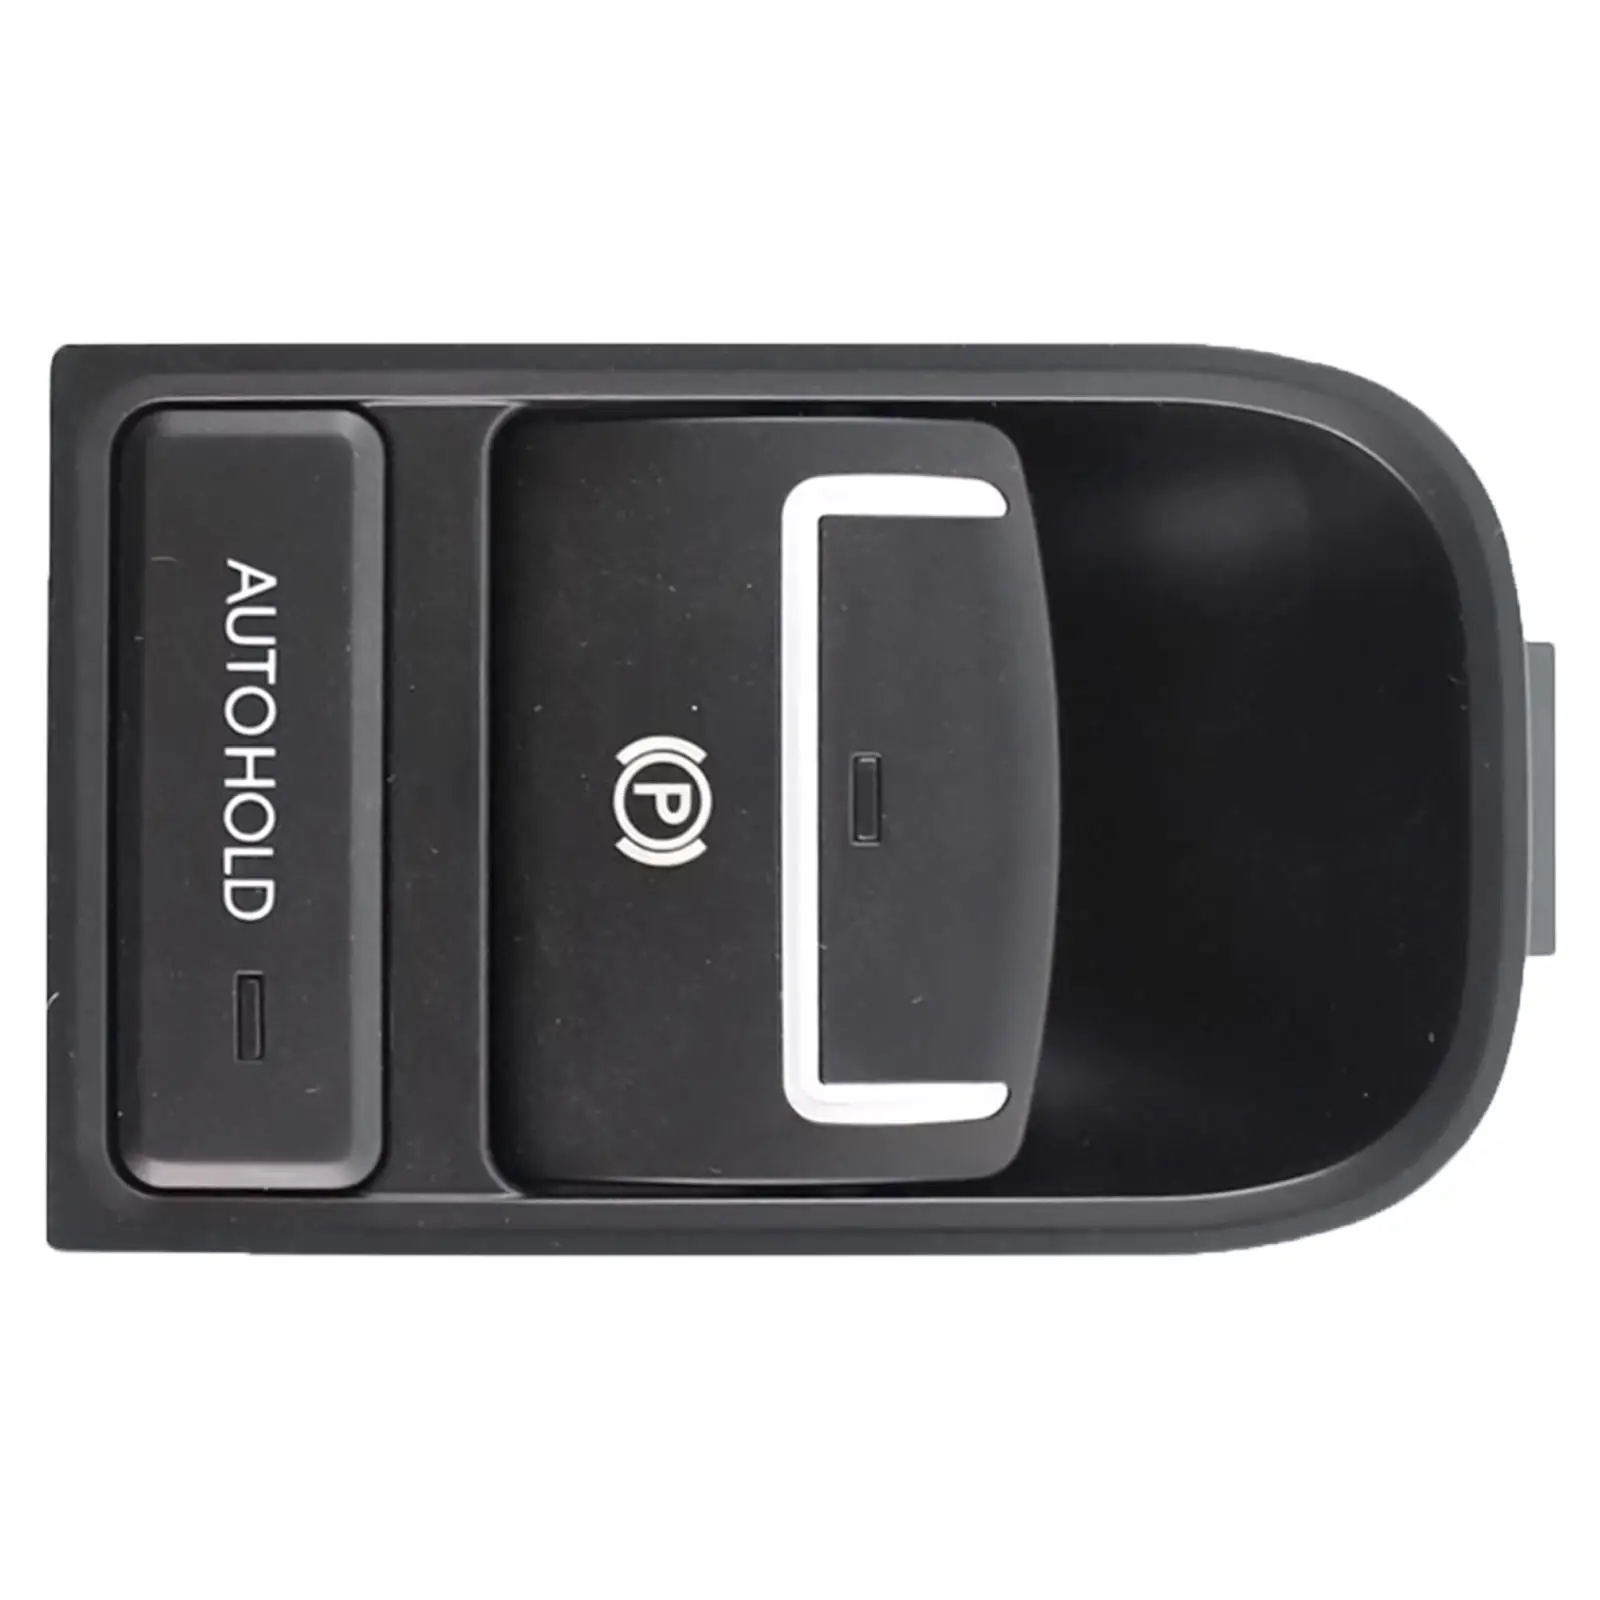 Electronic Auto Hand Brake Button 5N0927225A 100mm Parking Brake Switch for Seat 2011-2015 VW Tiguan